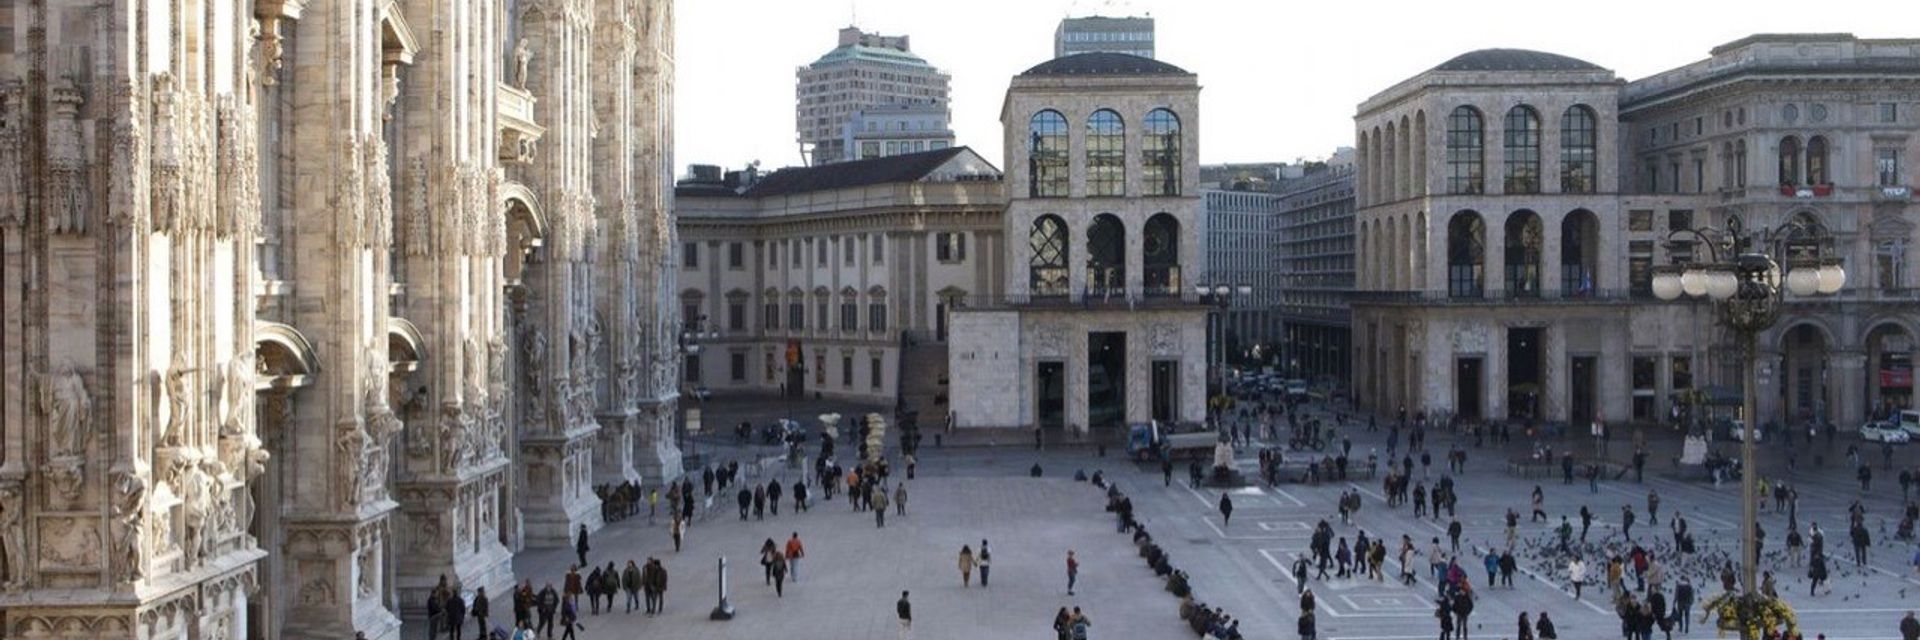 Museum of the twentieth century in Milan